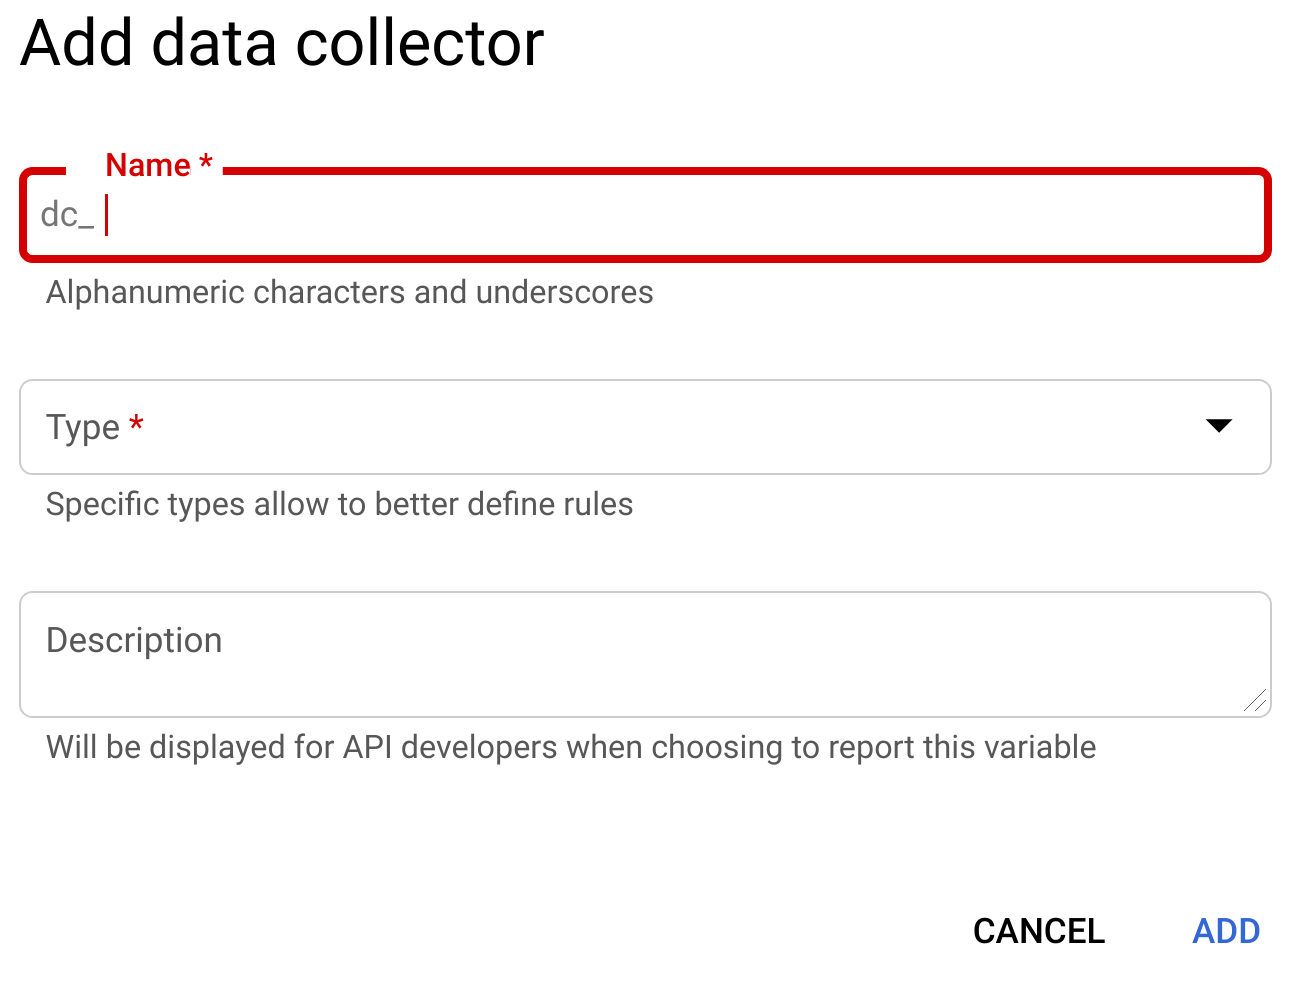 Add Data Collectors pane